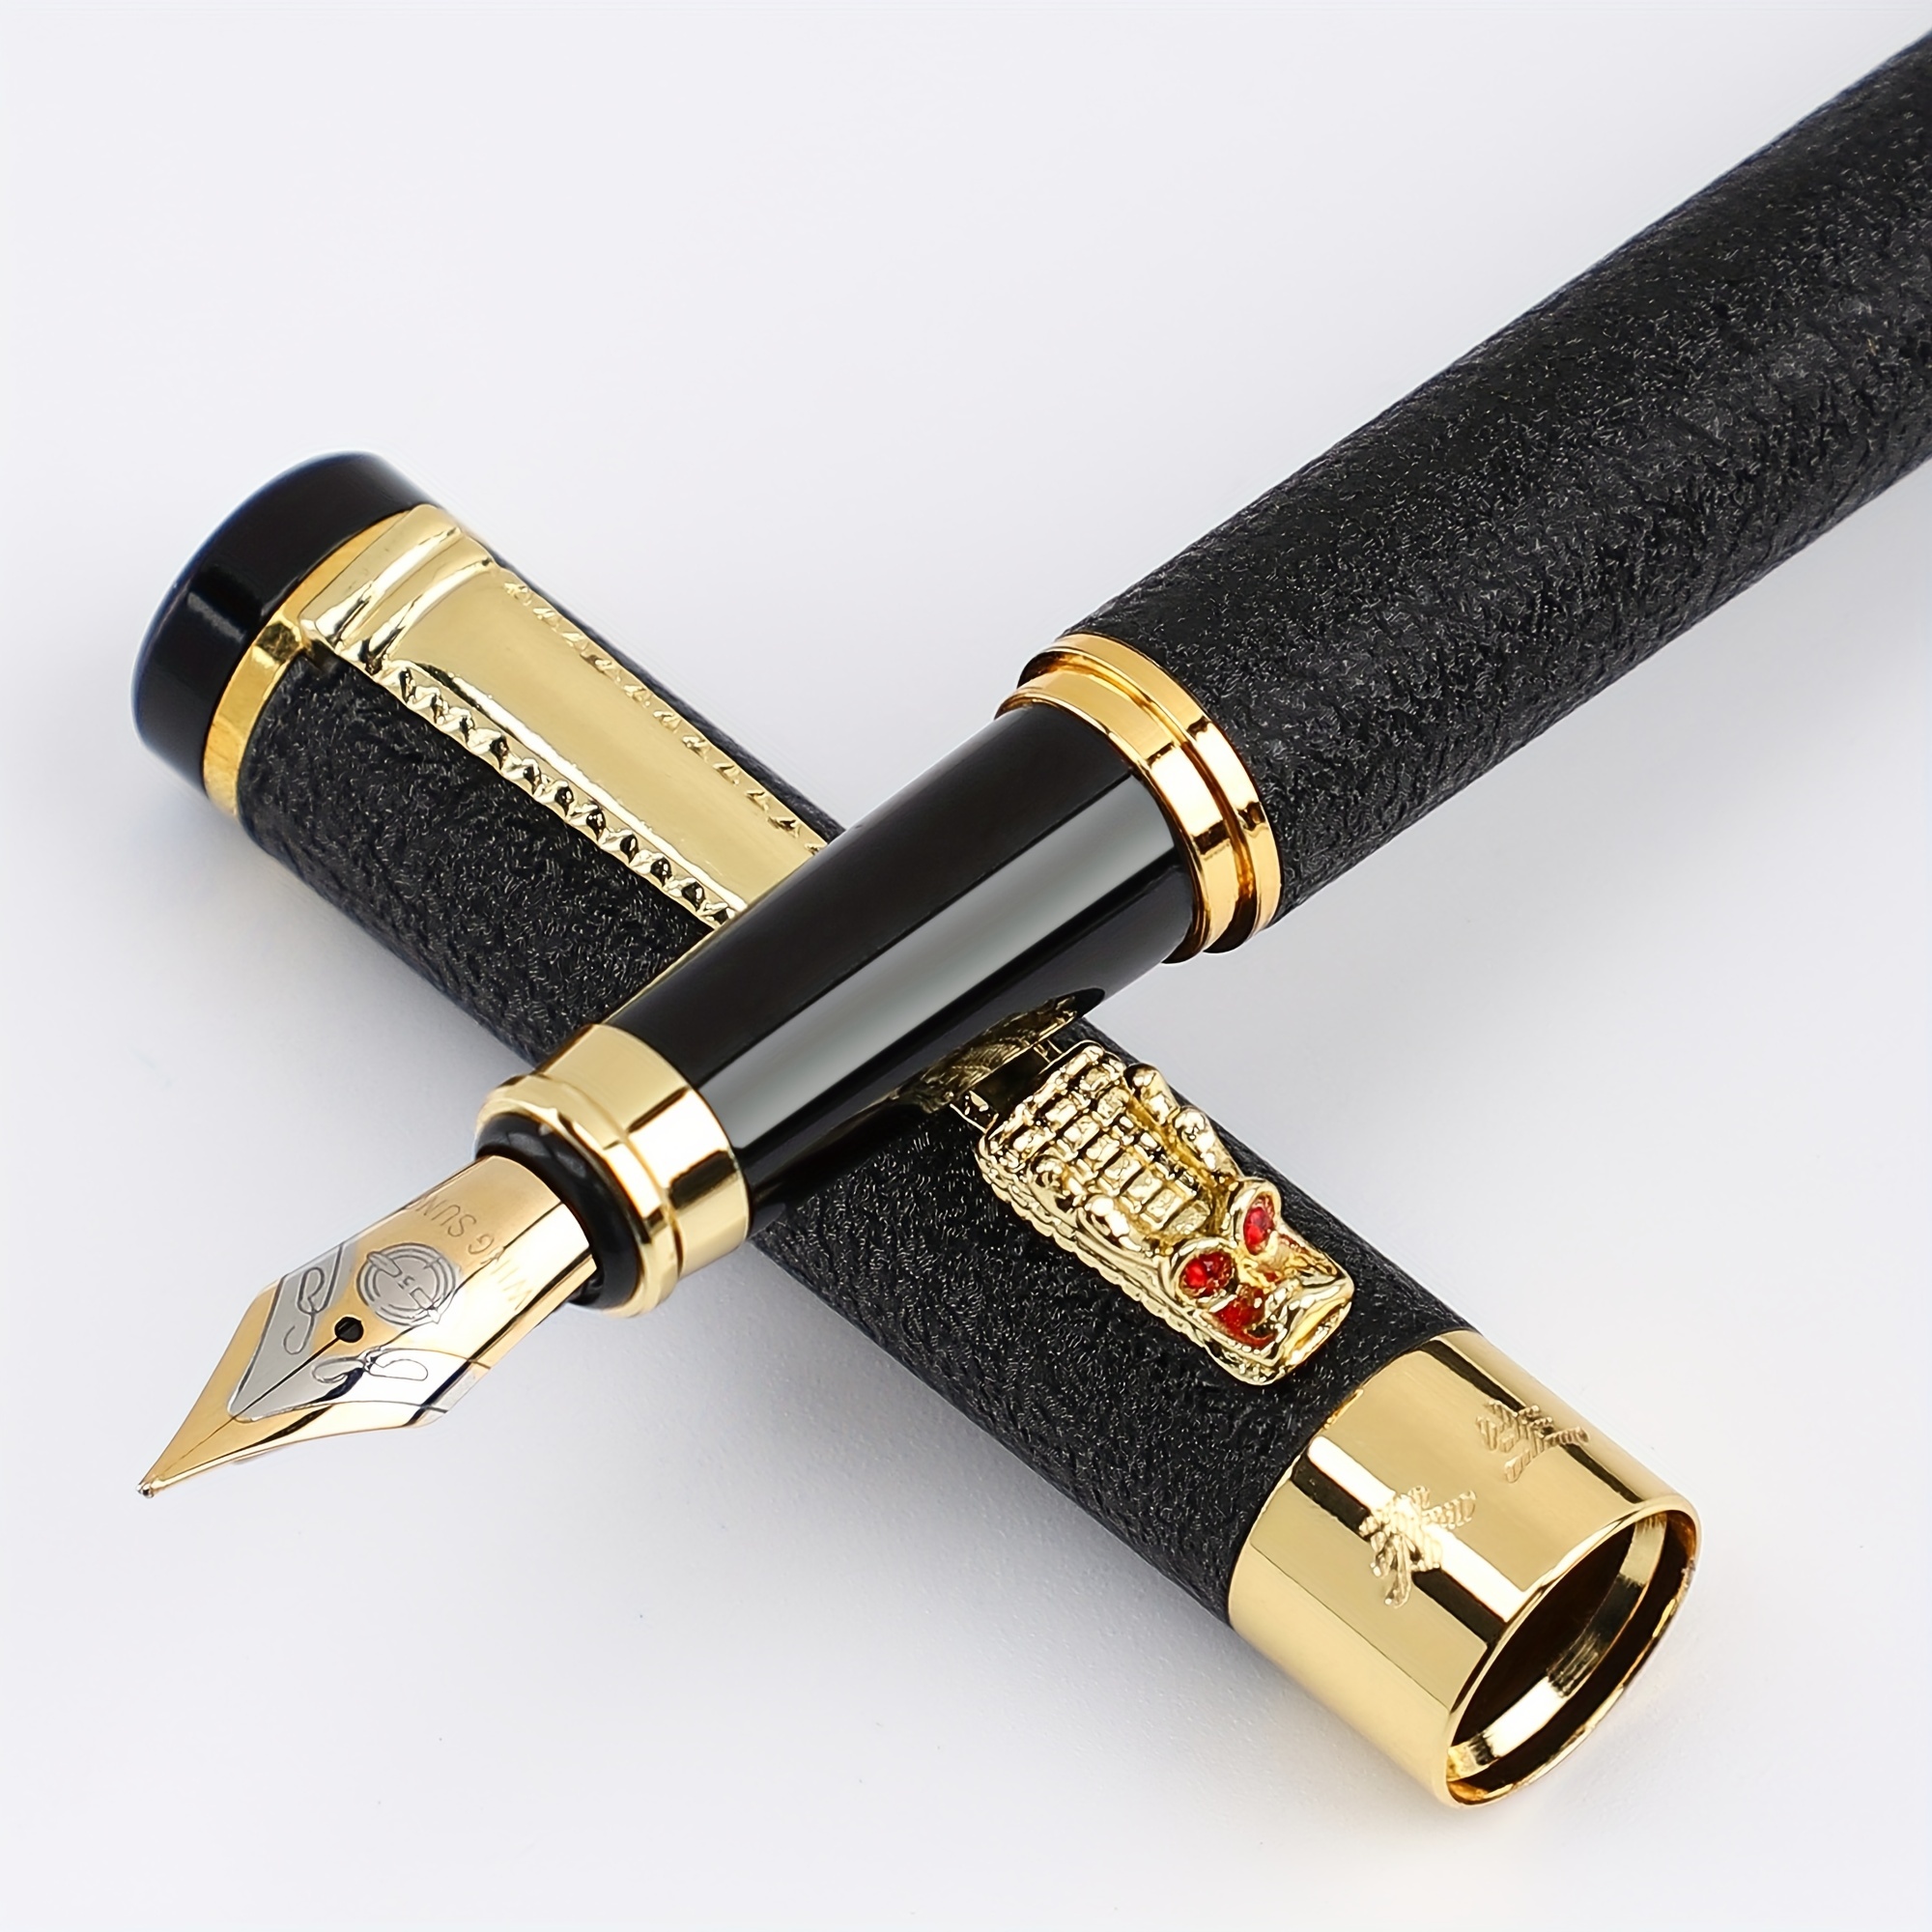  Shinycome Plumas estilográficas desechables de tinta para  escribir plumas de oficina de escritura suave para escribir caligrafía y  regalo : Productos de Oficina